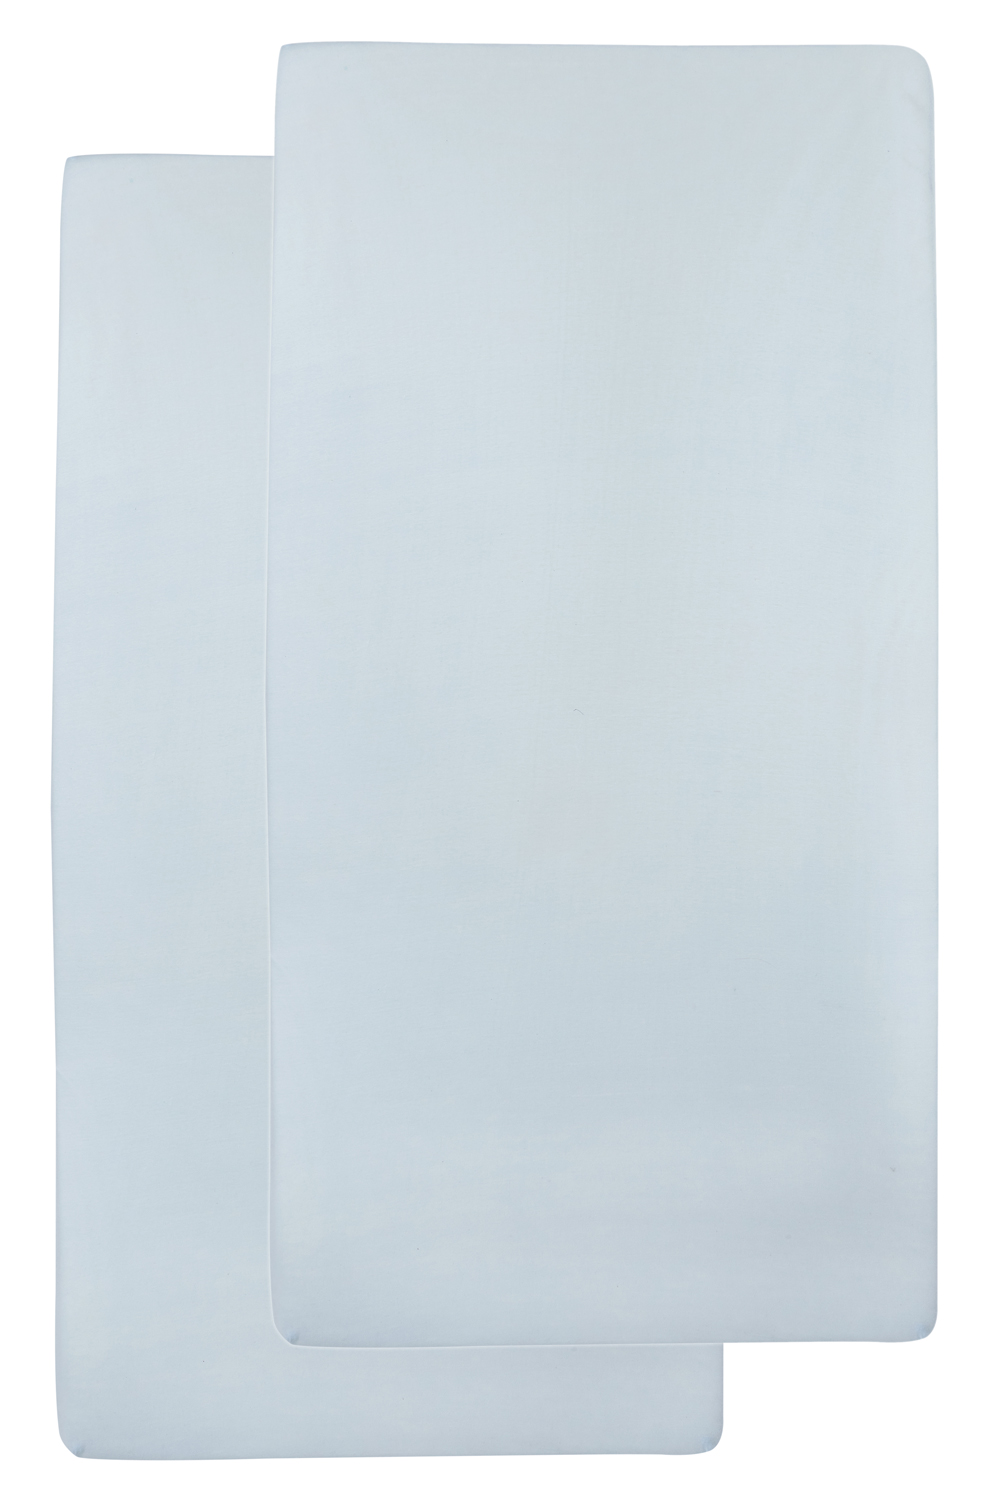 Jersey Hoeslaken 2-Pack - Lichtblauw - 40x80/90cm